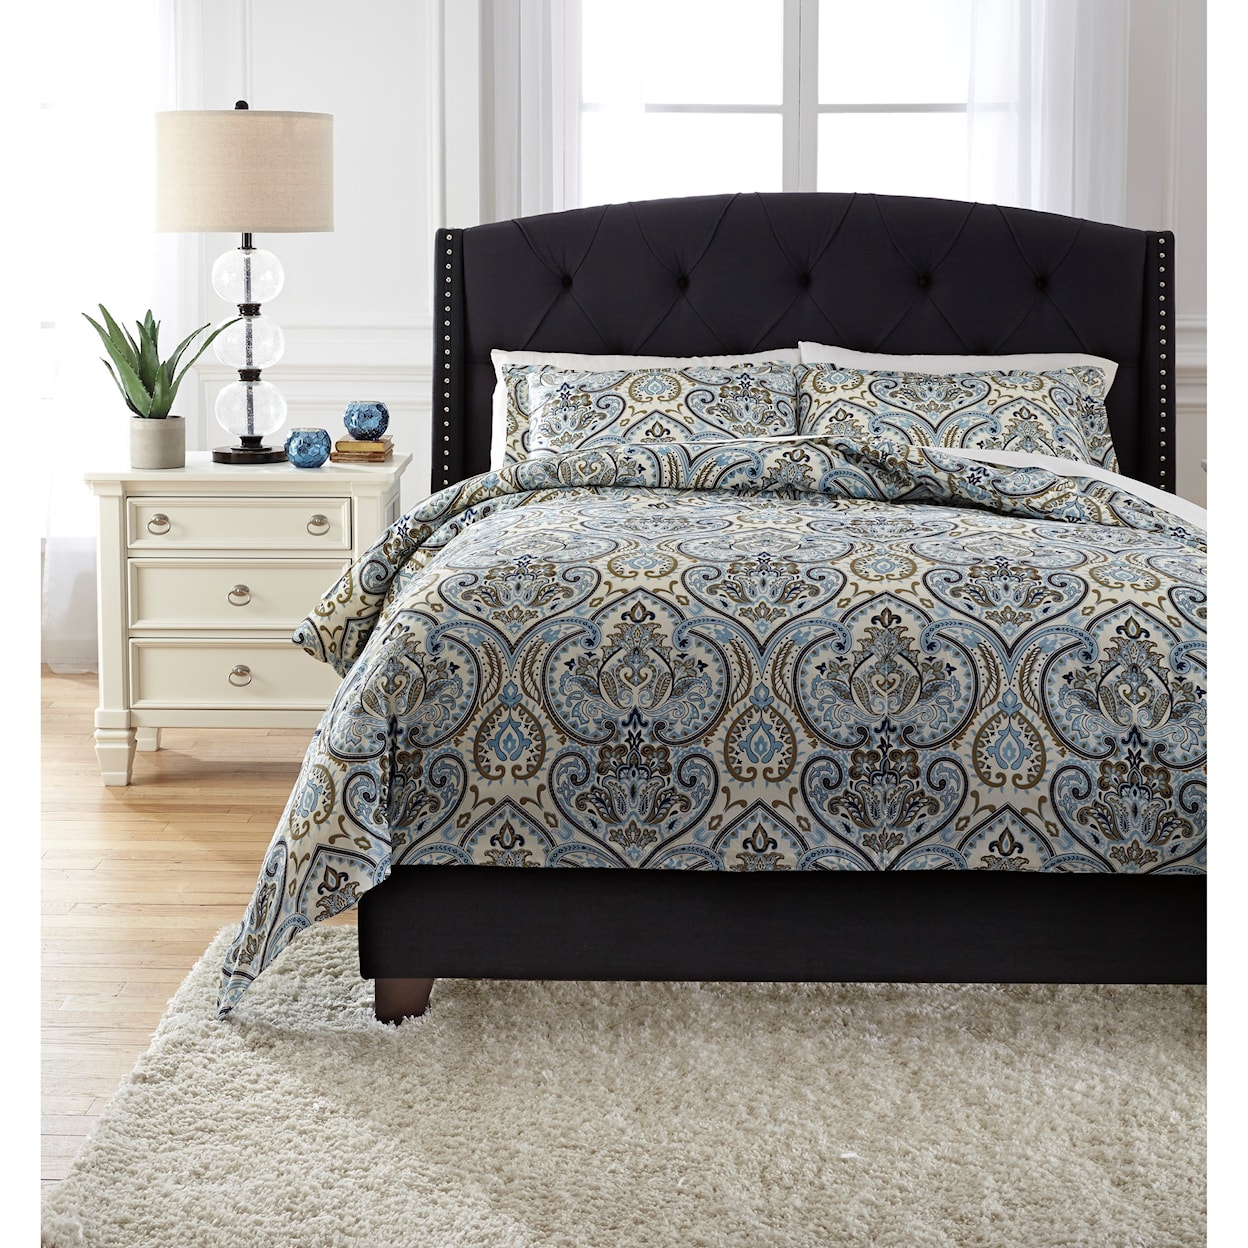 Ashley Furniture Signature Design Bedding Sets Queen Soliel Multi Duvet Cover Set